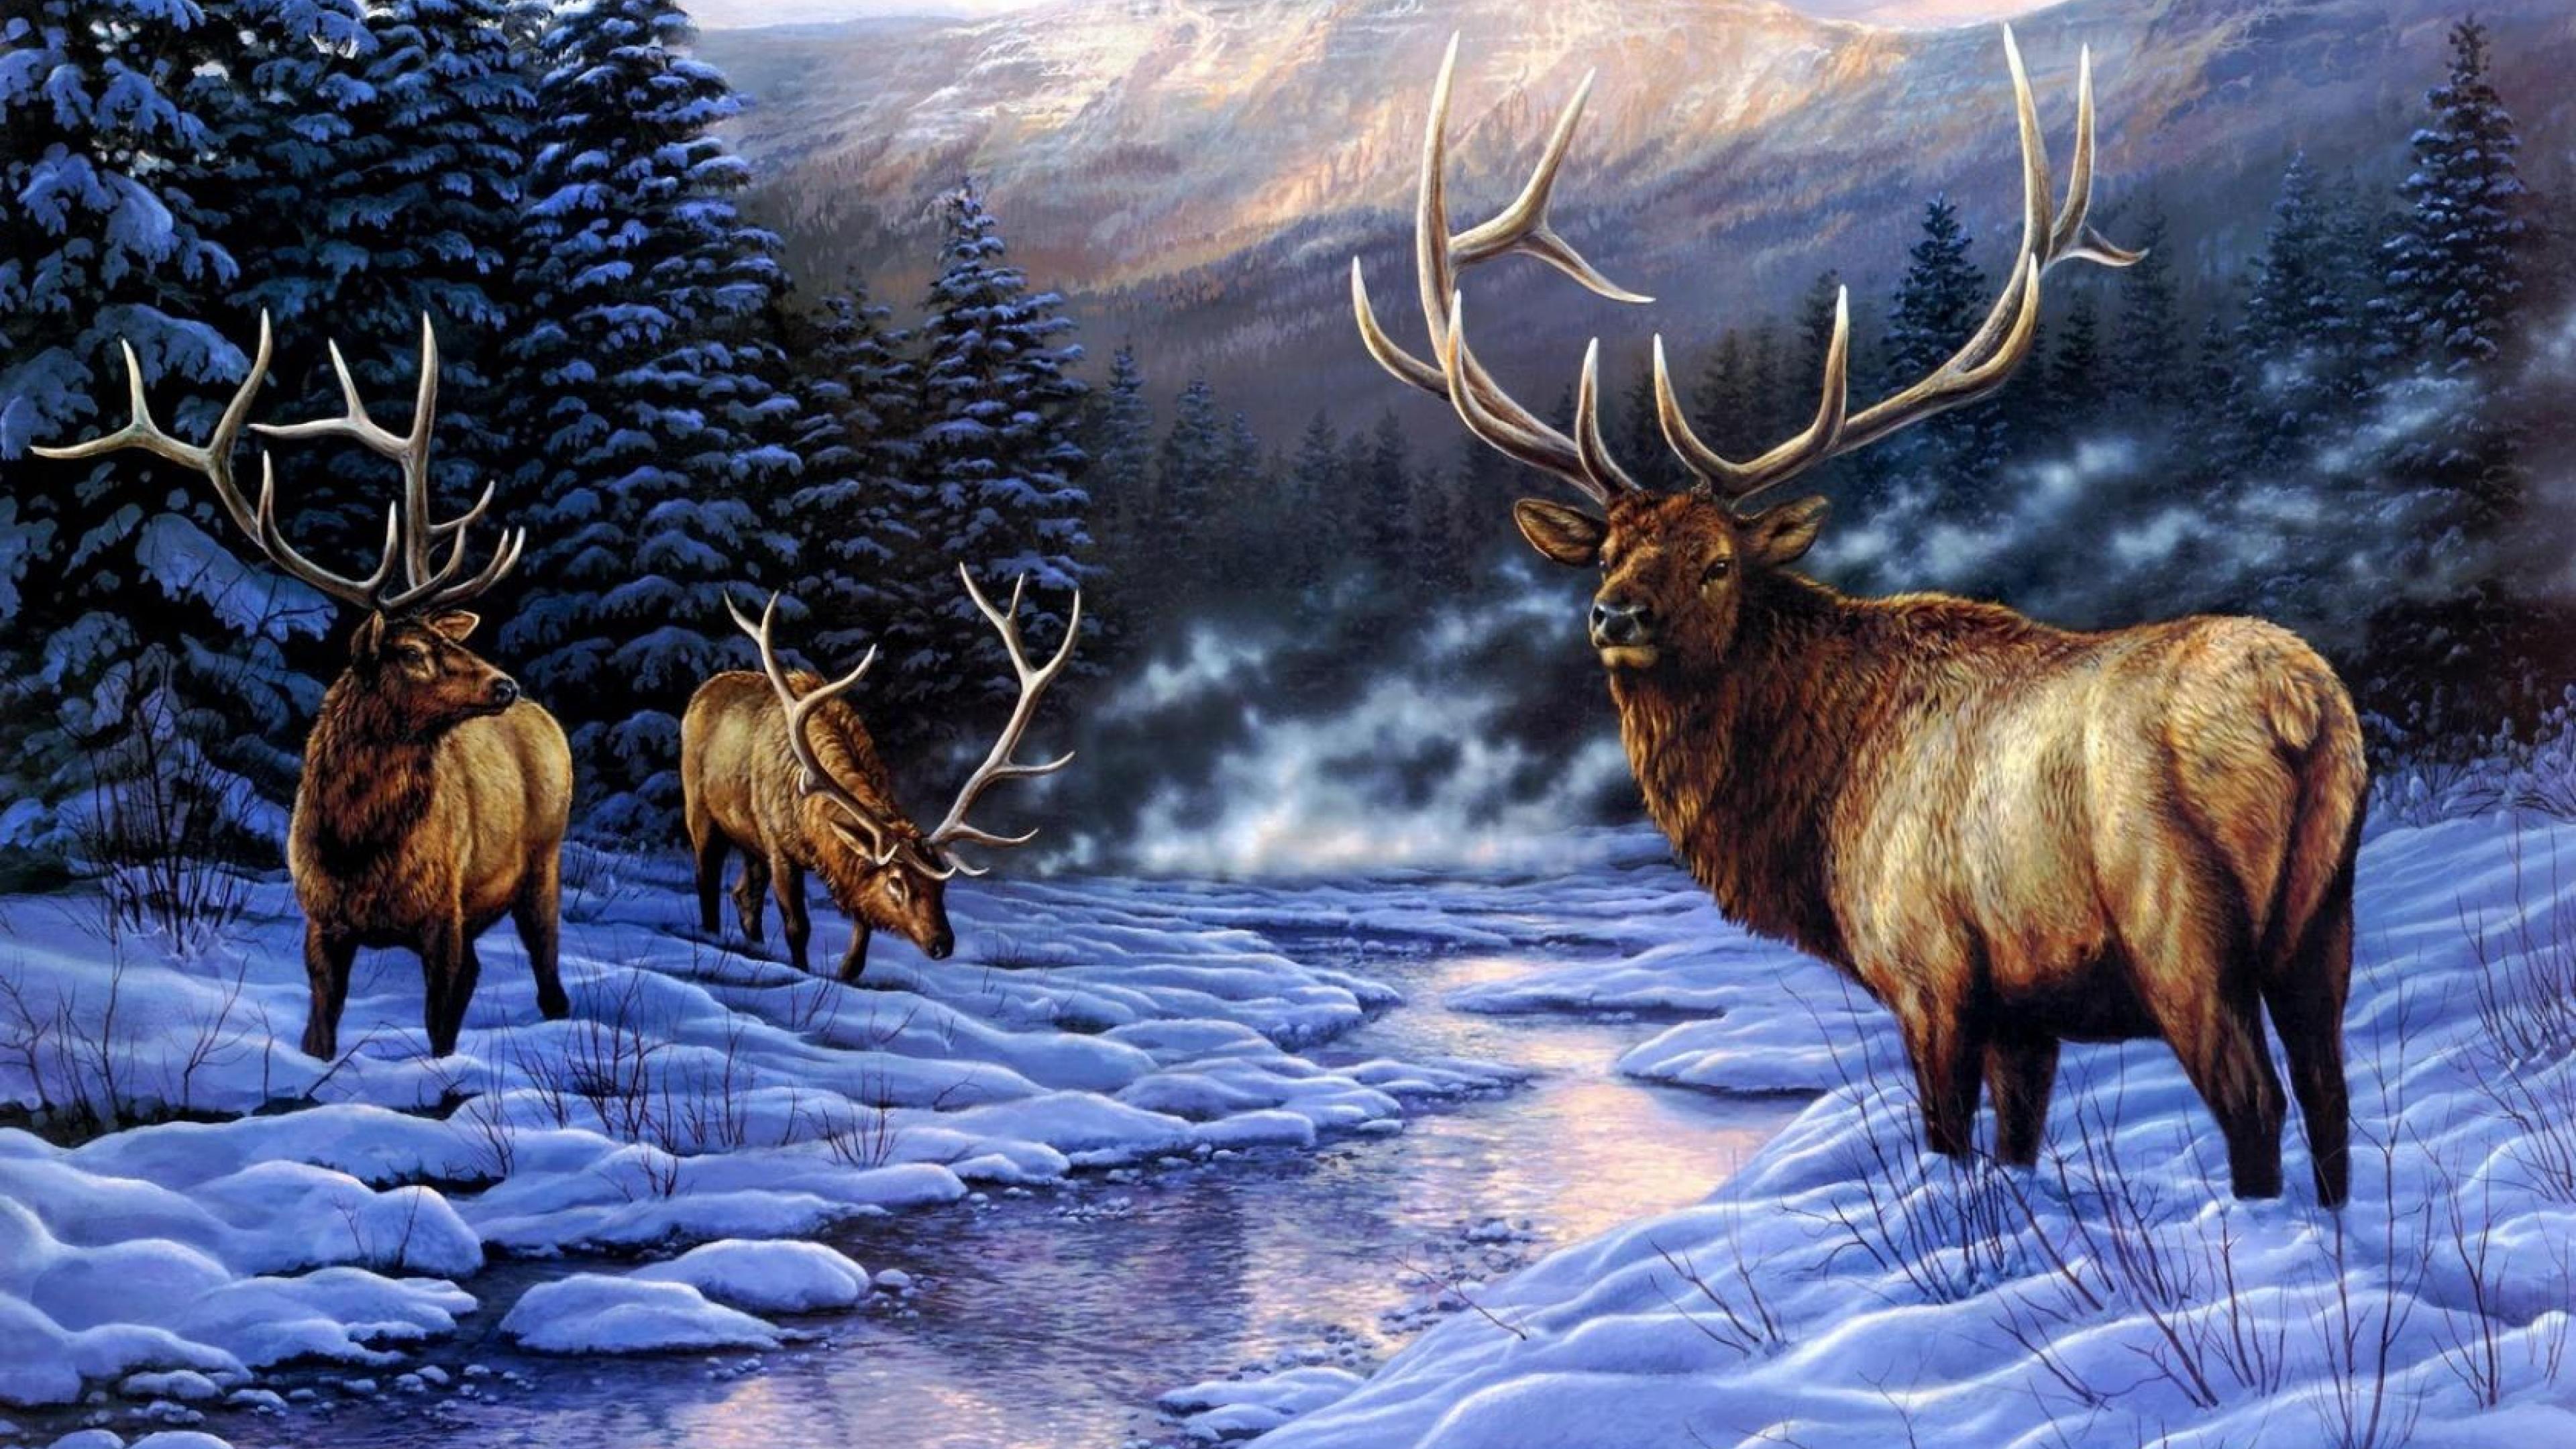 Deer Artistic Photo With Animal Winter River Snow Mountain Wallpaper HD 3840x2160, Wallpaper13.com